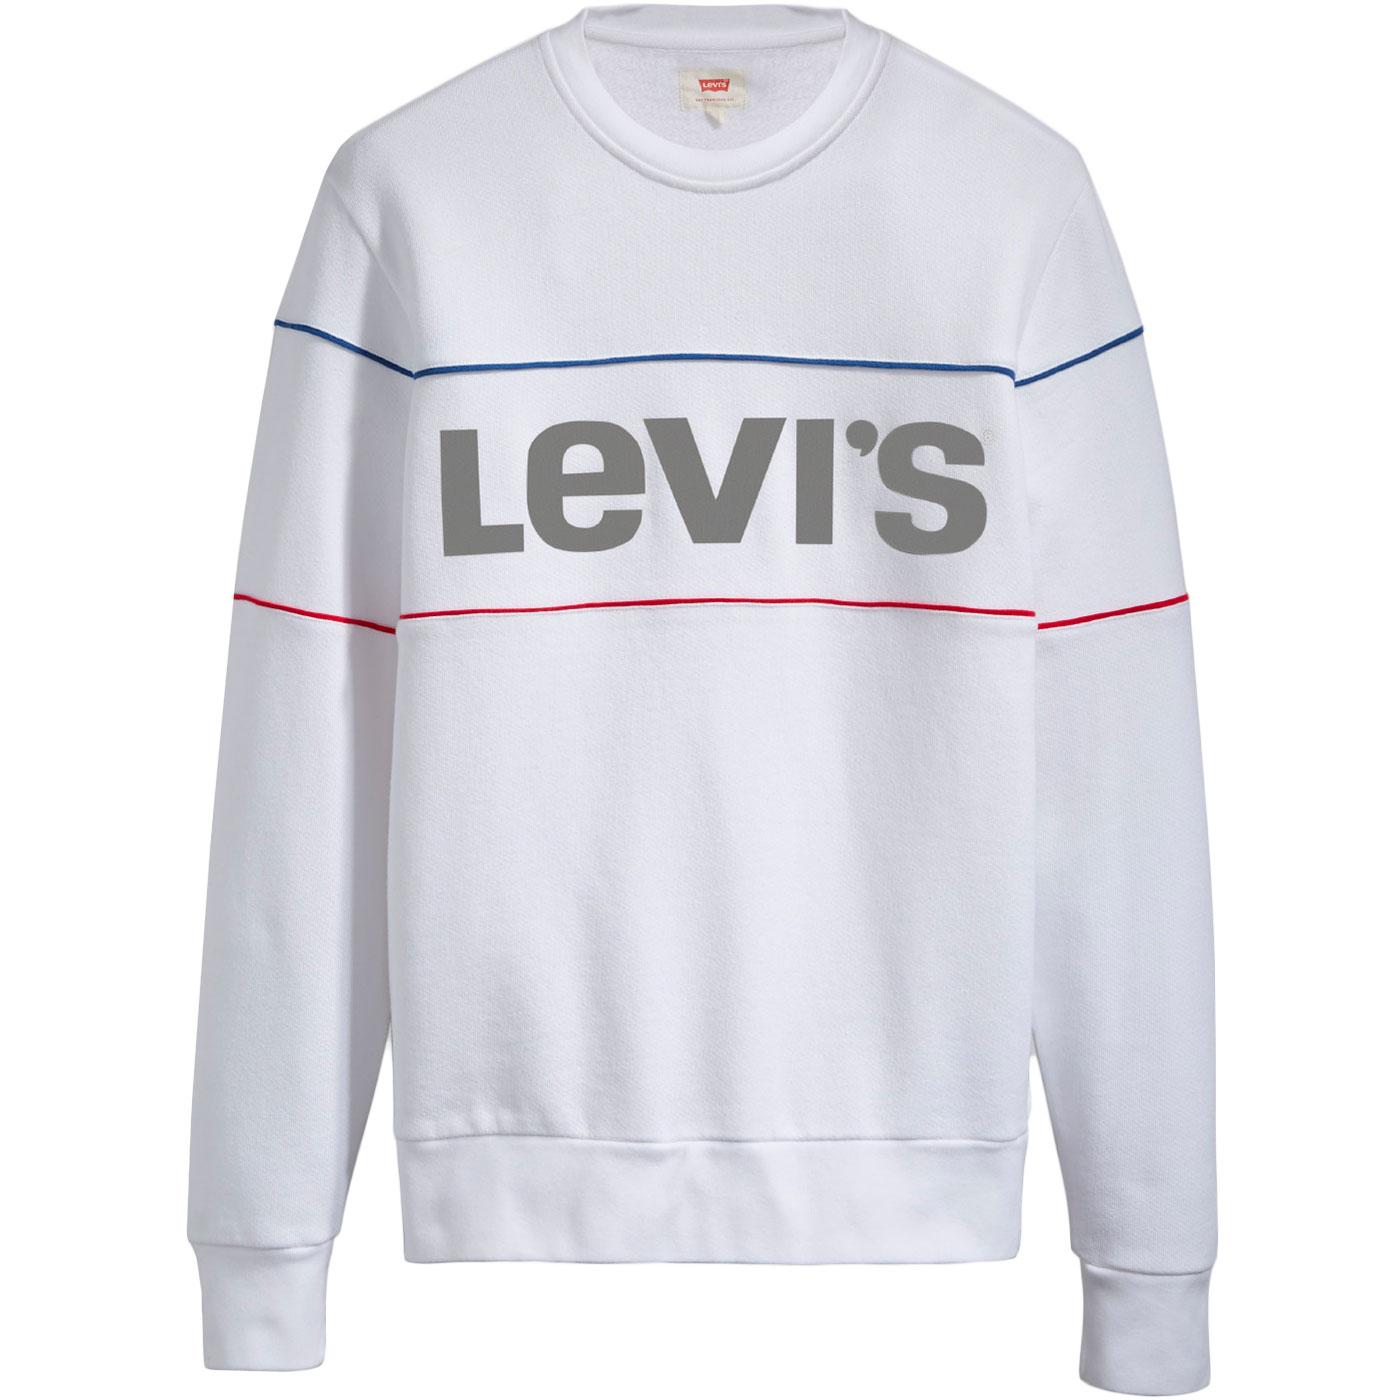 LEVI'S Men's Retro 70s Mod Reflective Sweatshirt in White